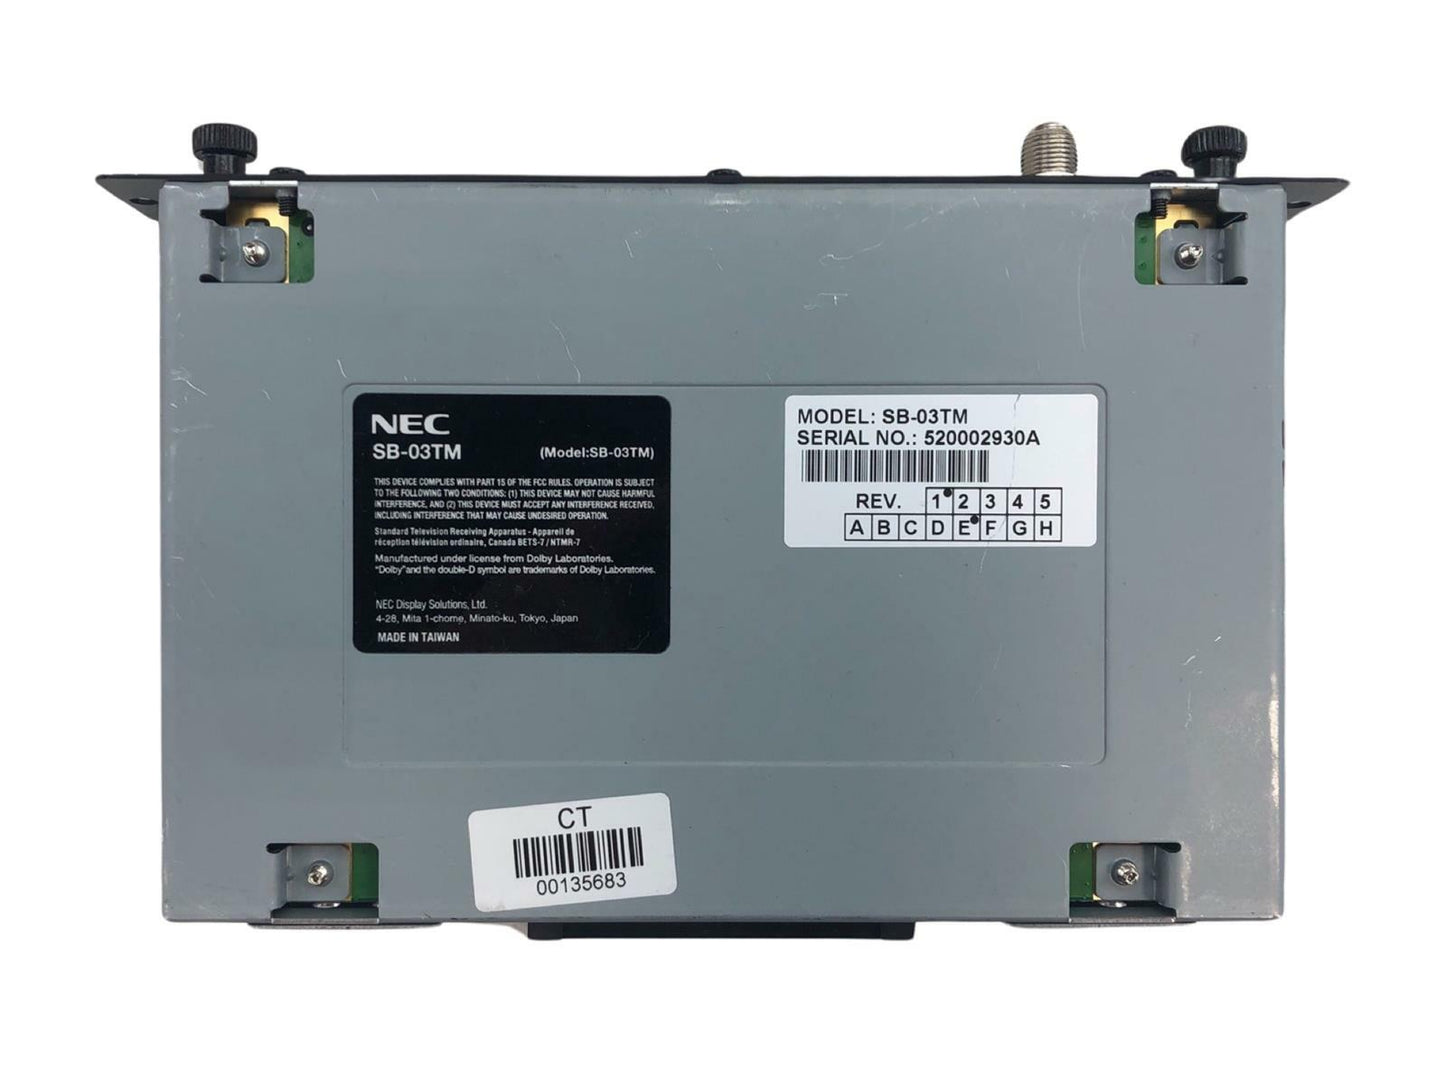 NEC SB-03TM ATSC Digital TV Tuner Module